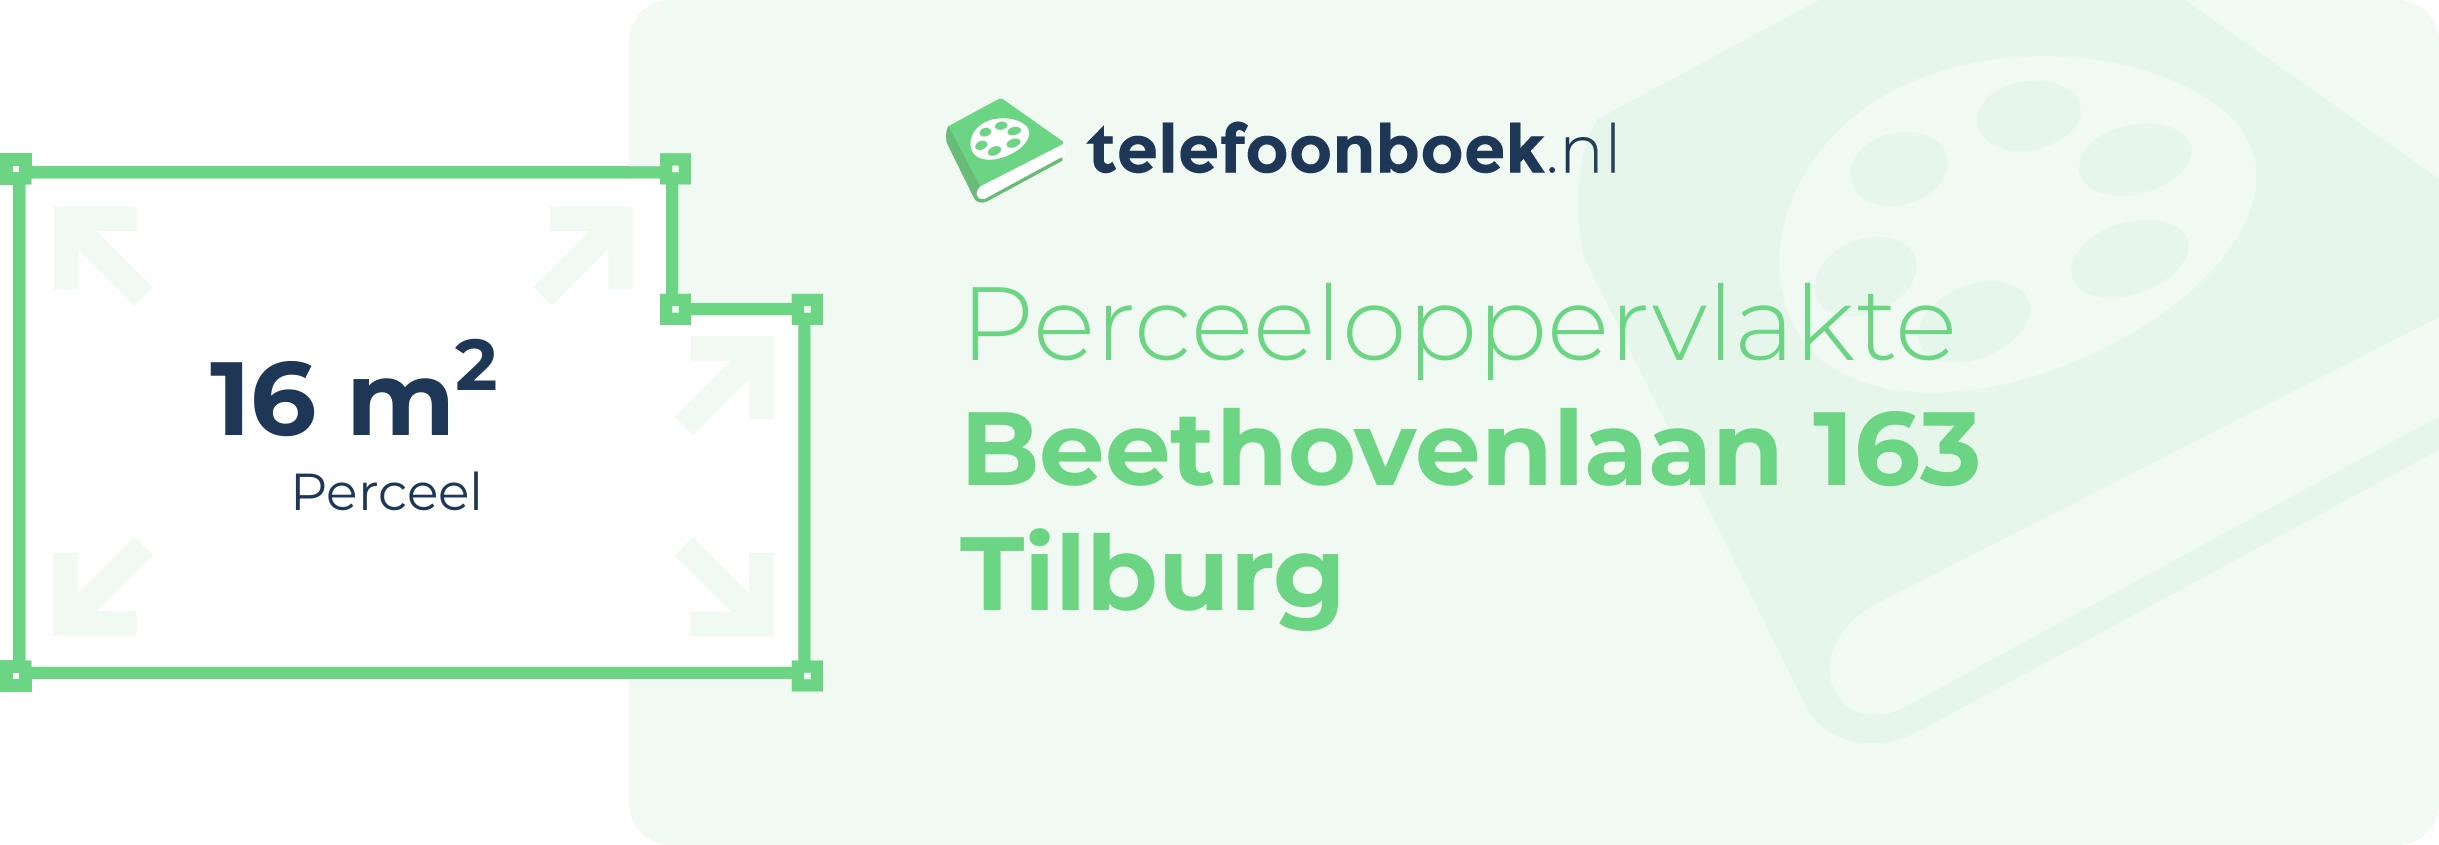 Perceeloppervlakte Beethovenlaan 163 Tilburg